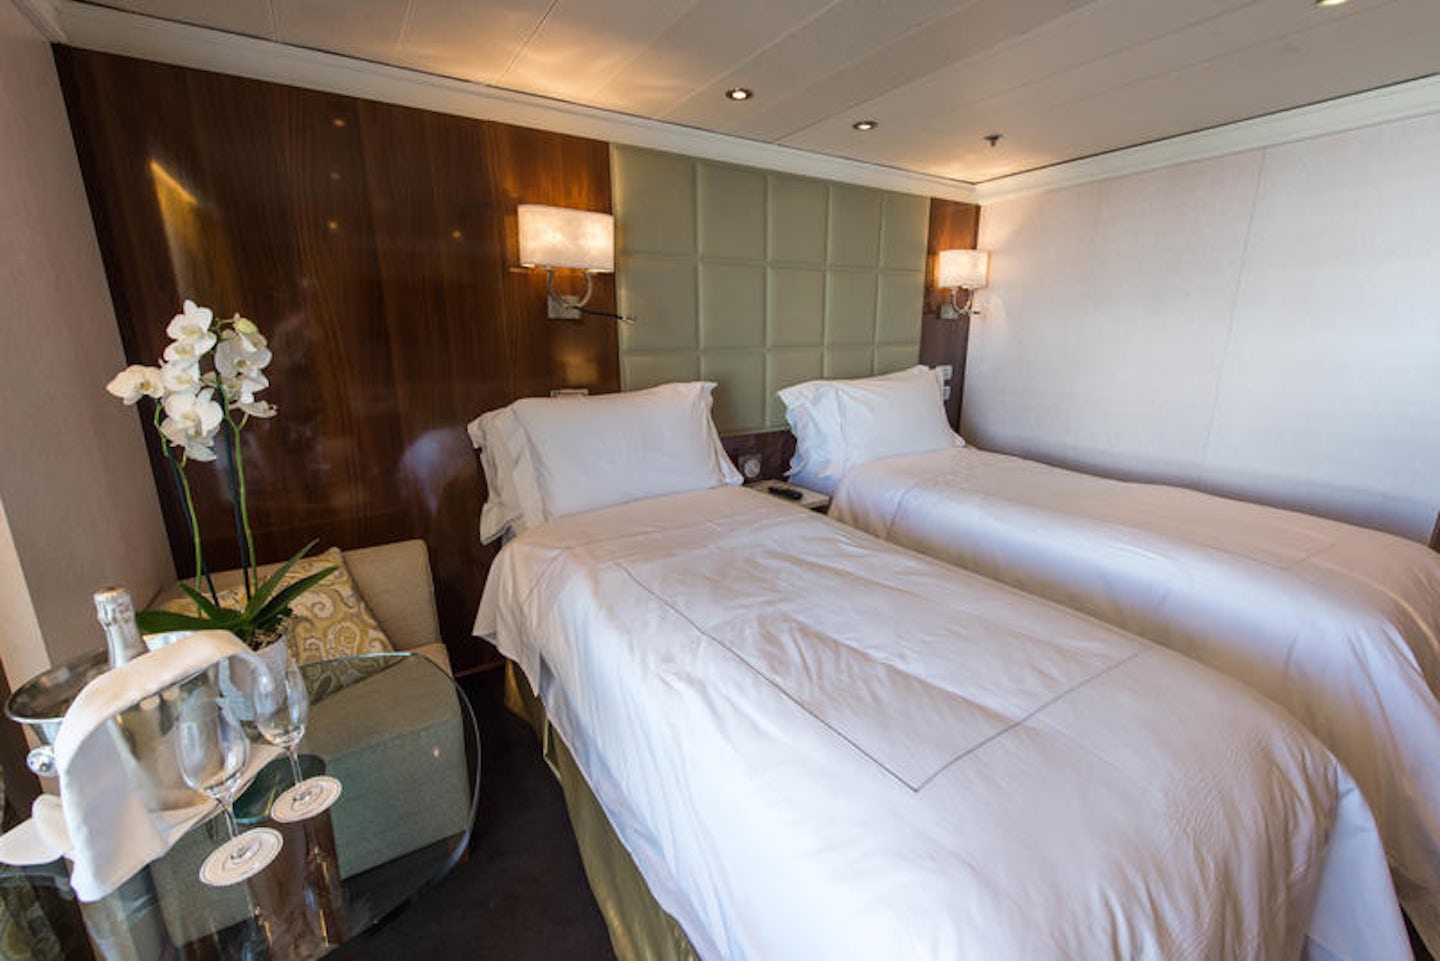 The Accessible Concierge Suite on Seven Seas Navigator